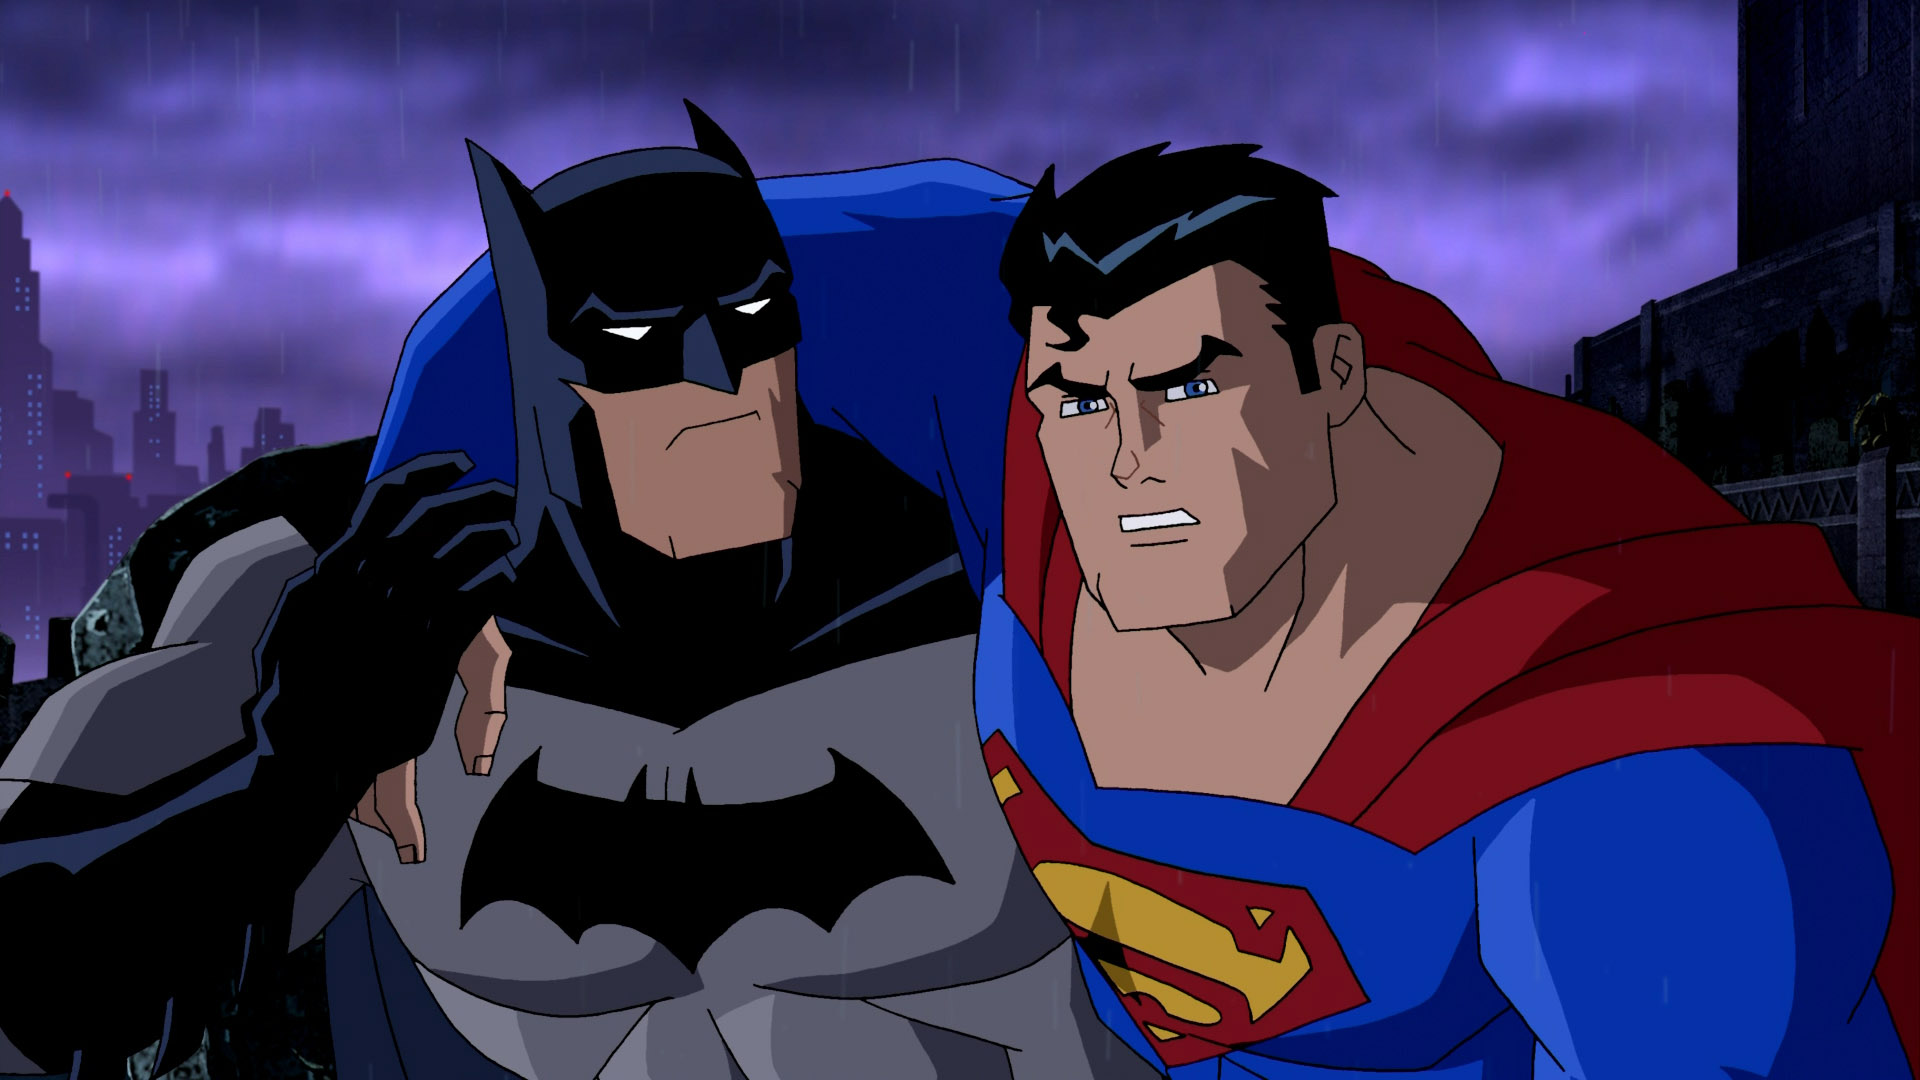 Superman/Batman: Public Enemies Wallpapers